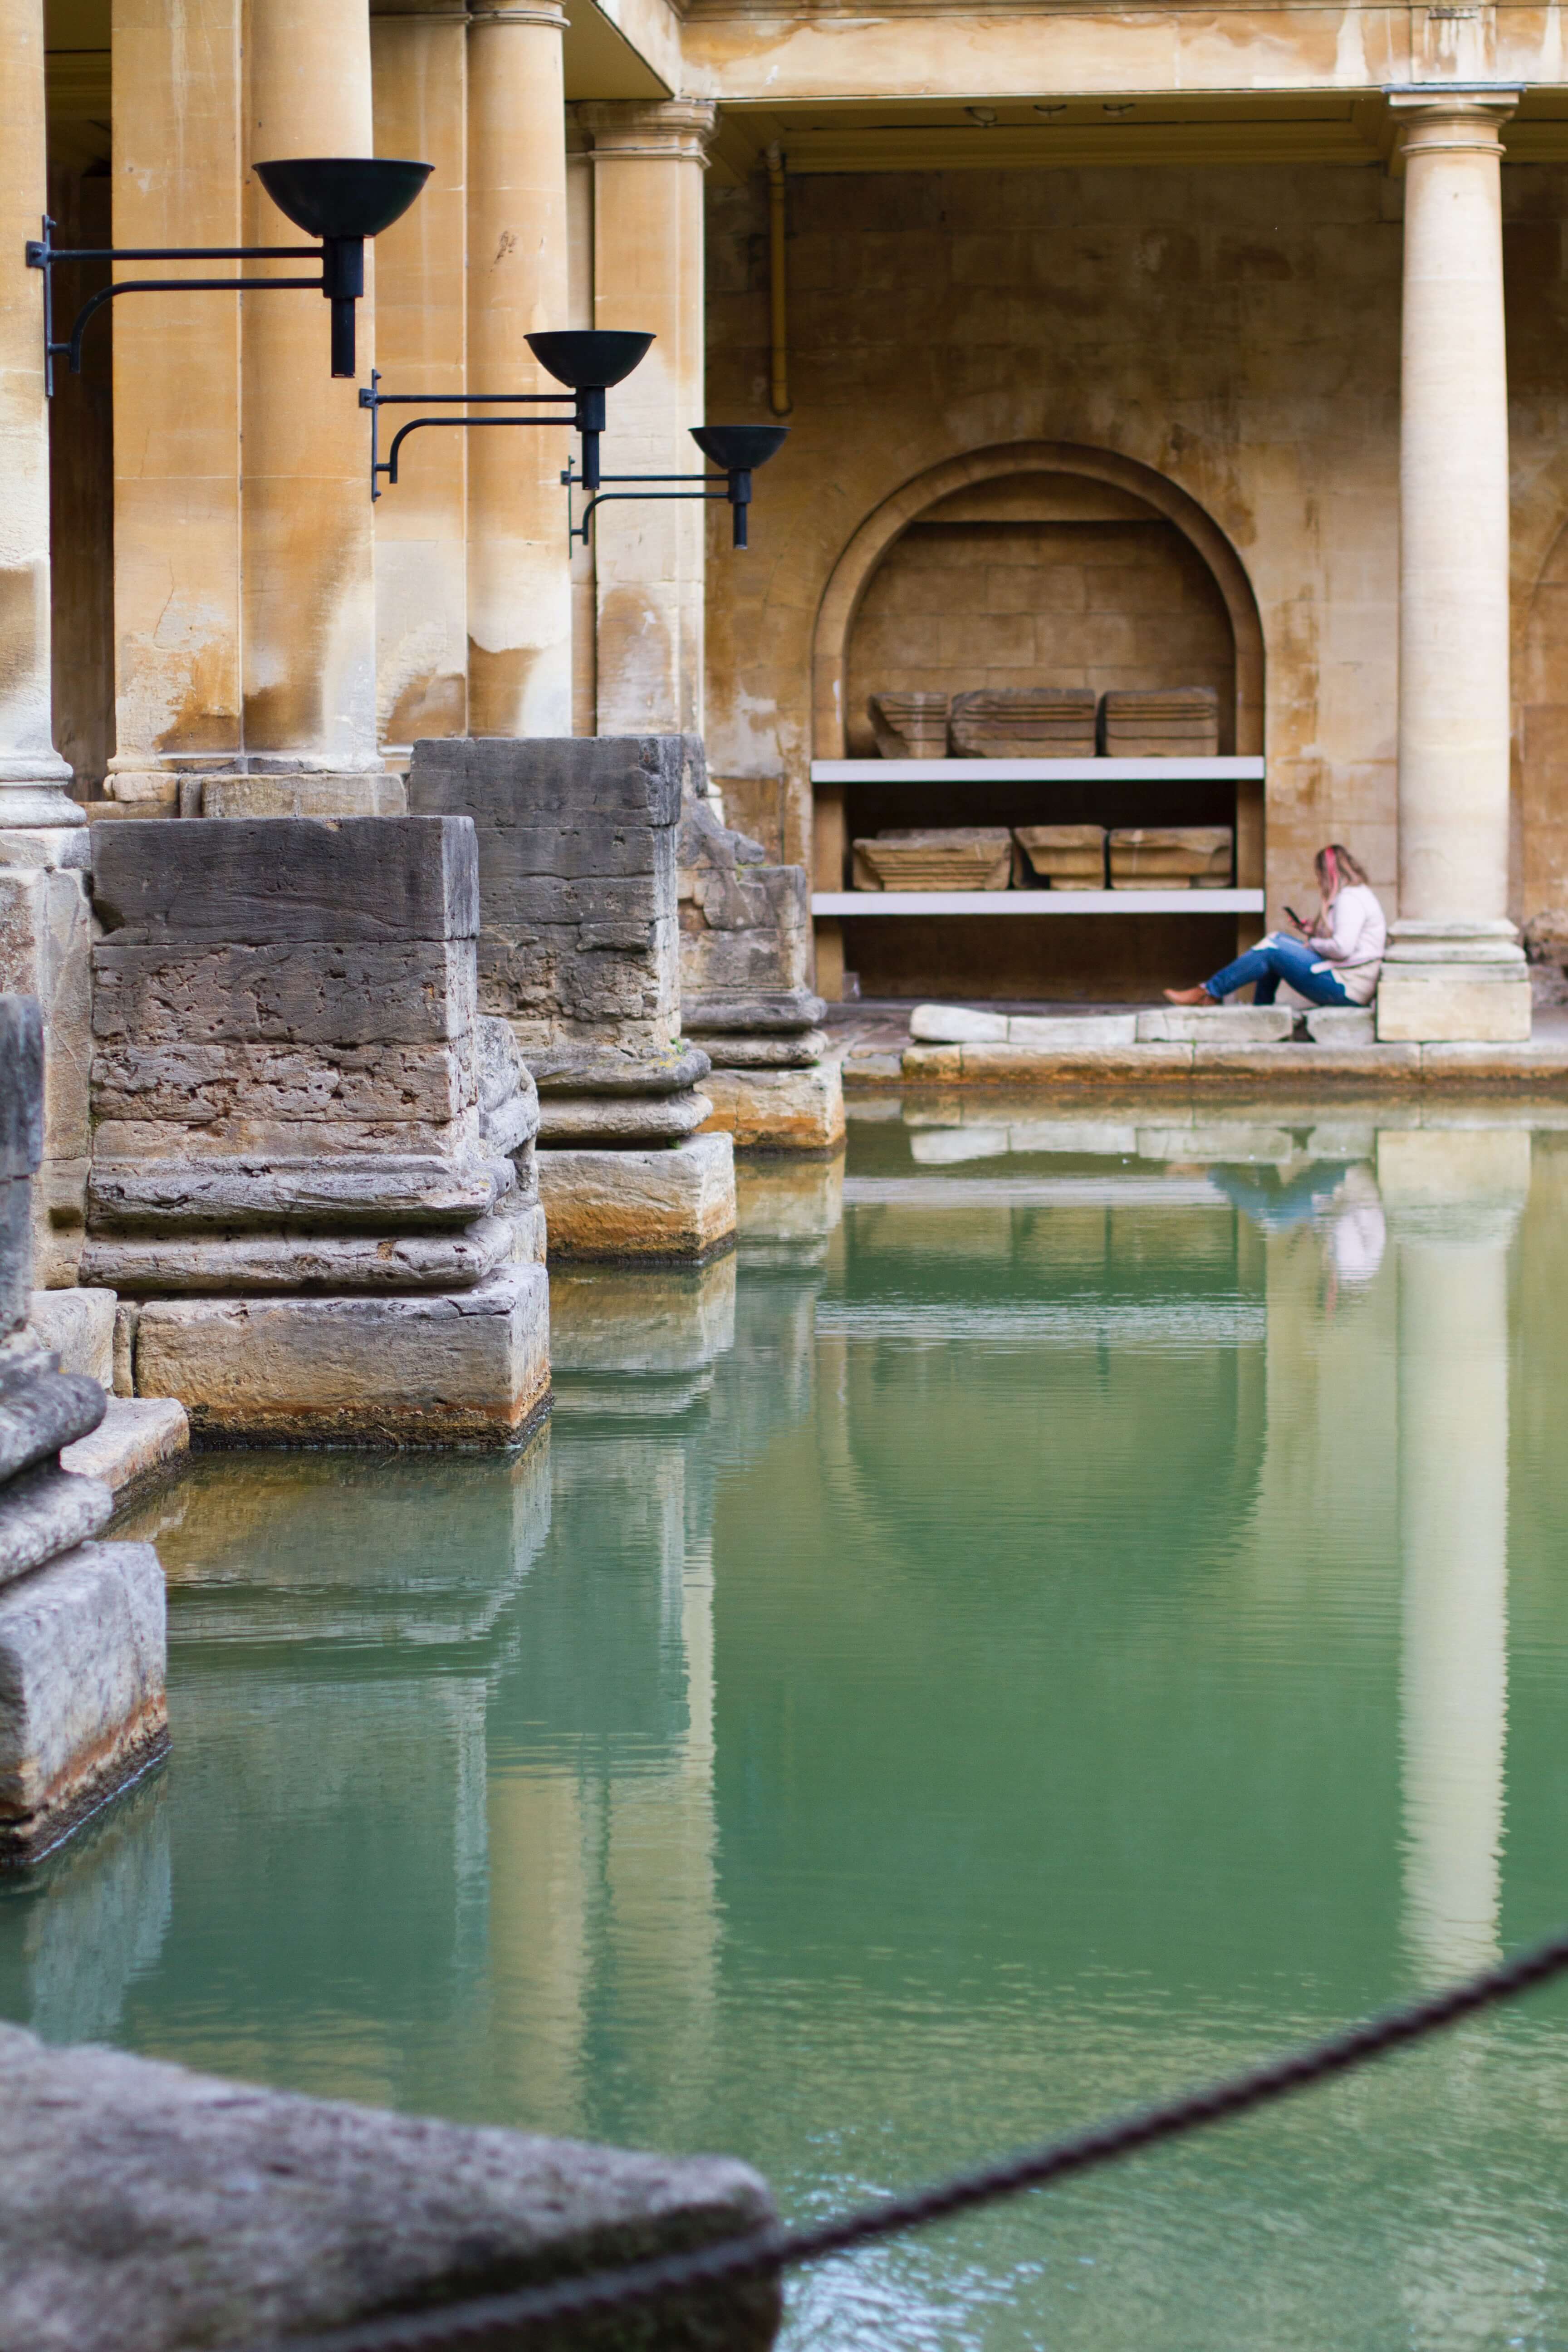 The use of Roman Baths